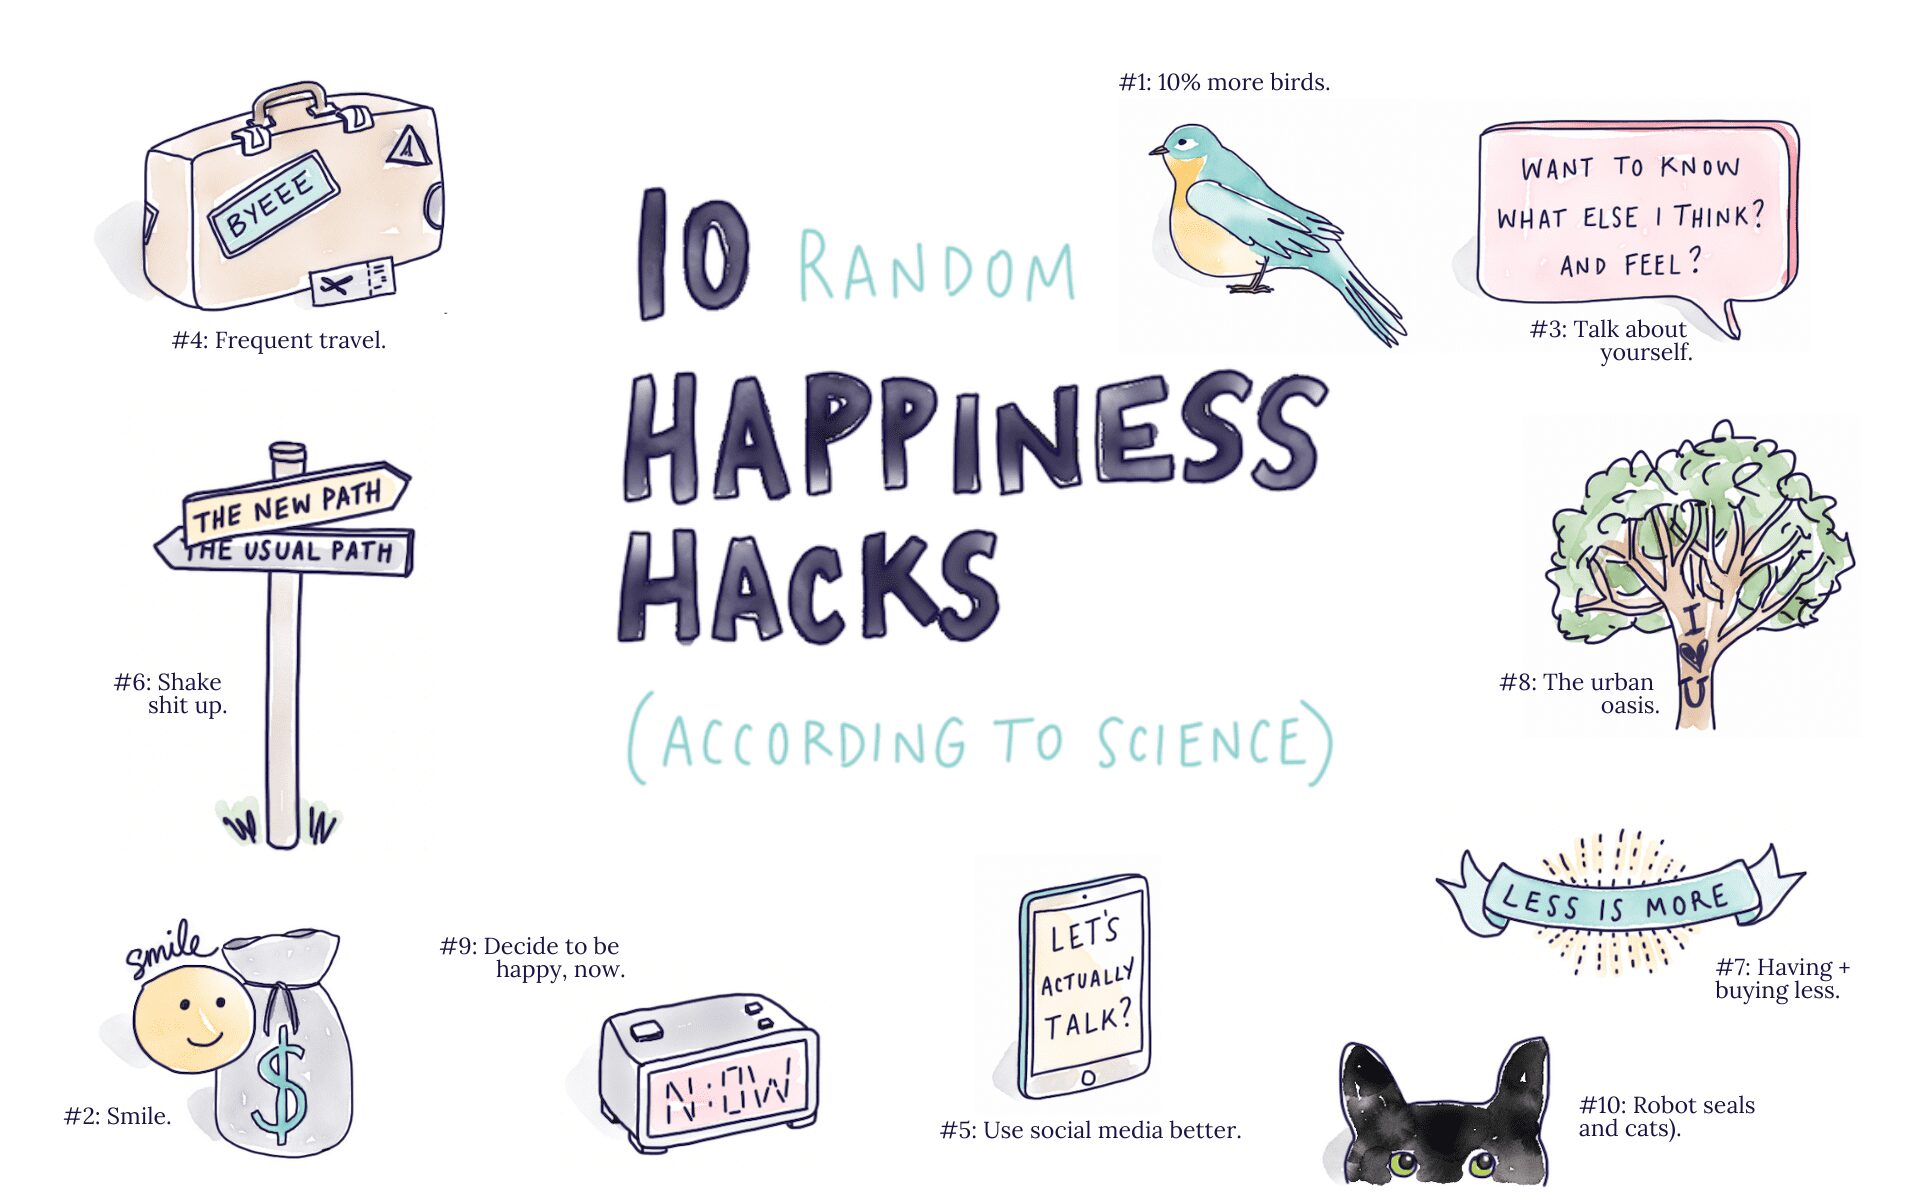 10 Random Happiness Hacks, According to Science